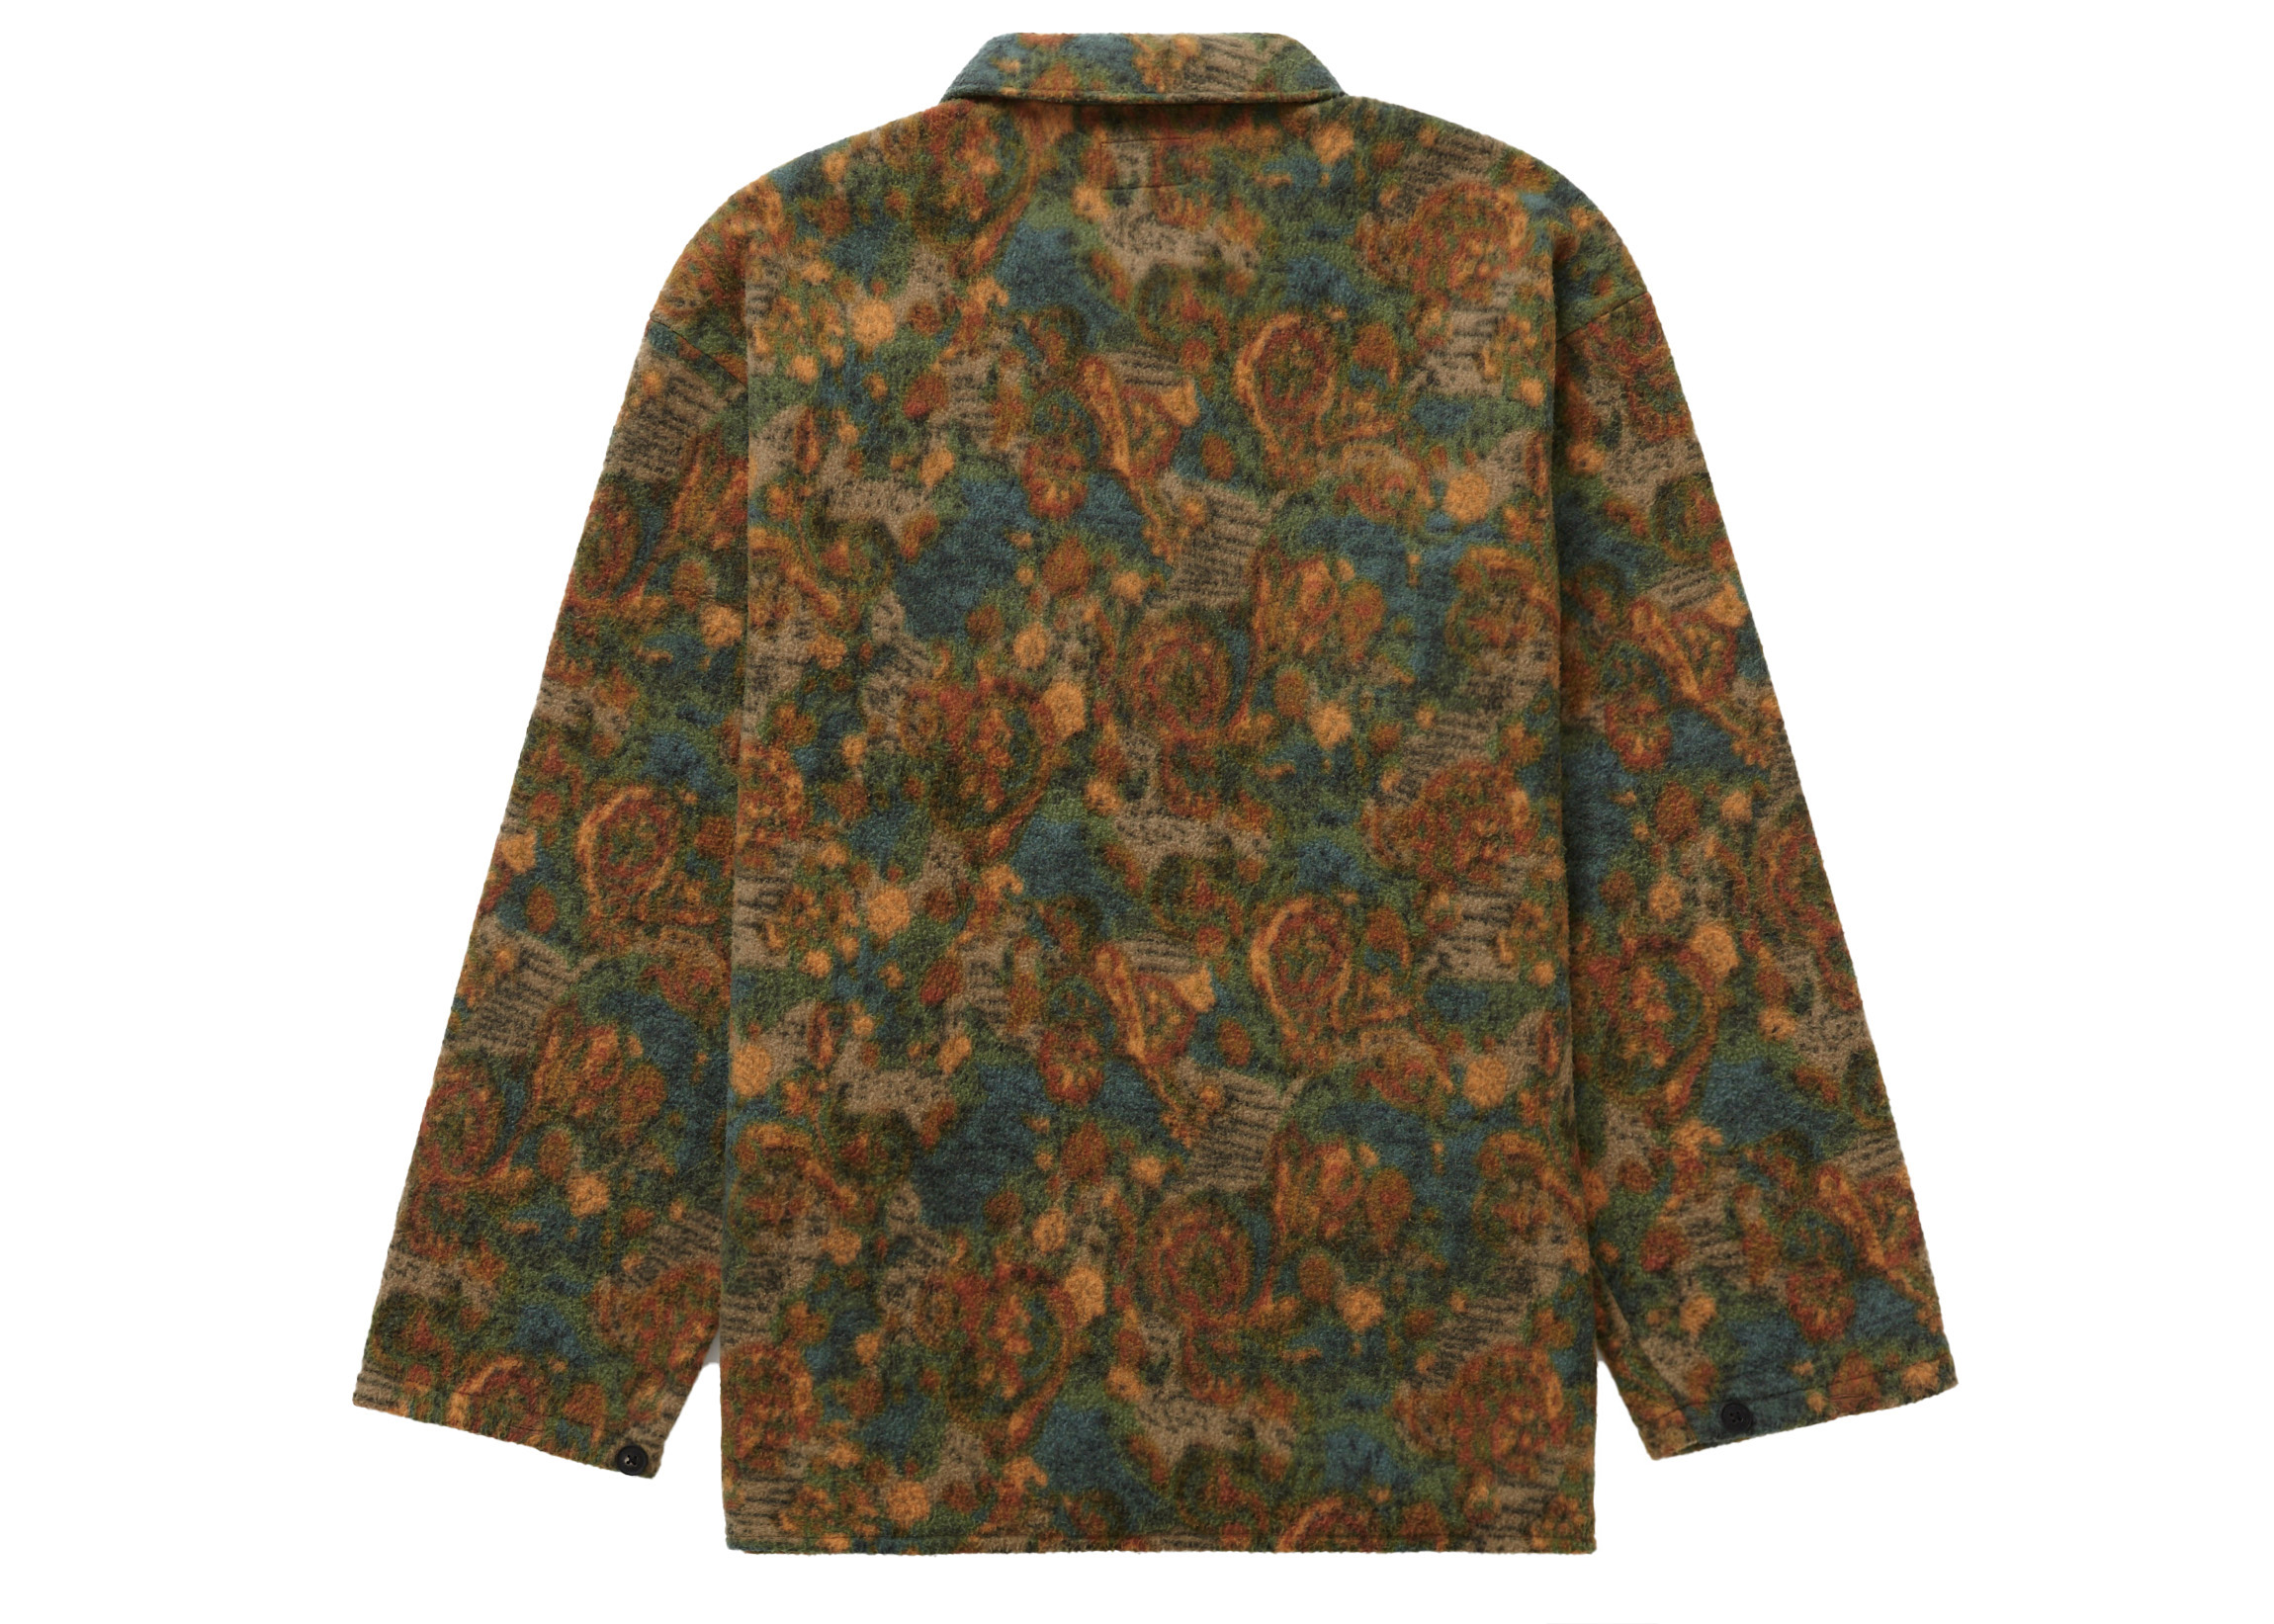 supreme Paisley fleece shirt 21aw 10000円引き - geoffsclub.com